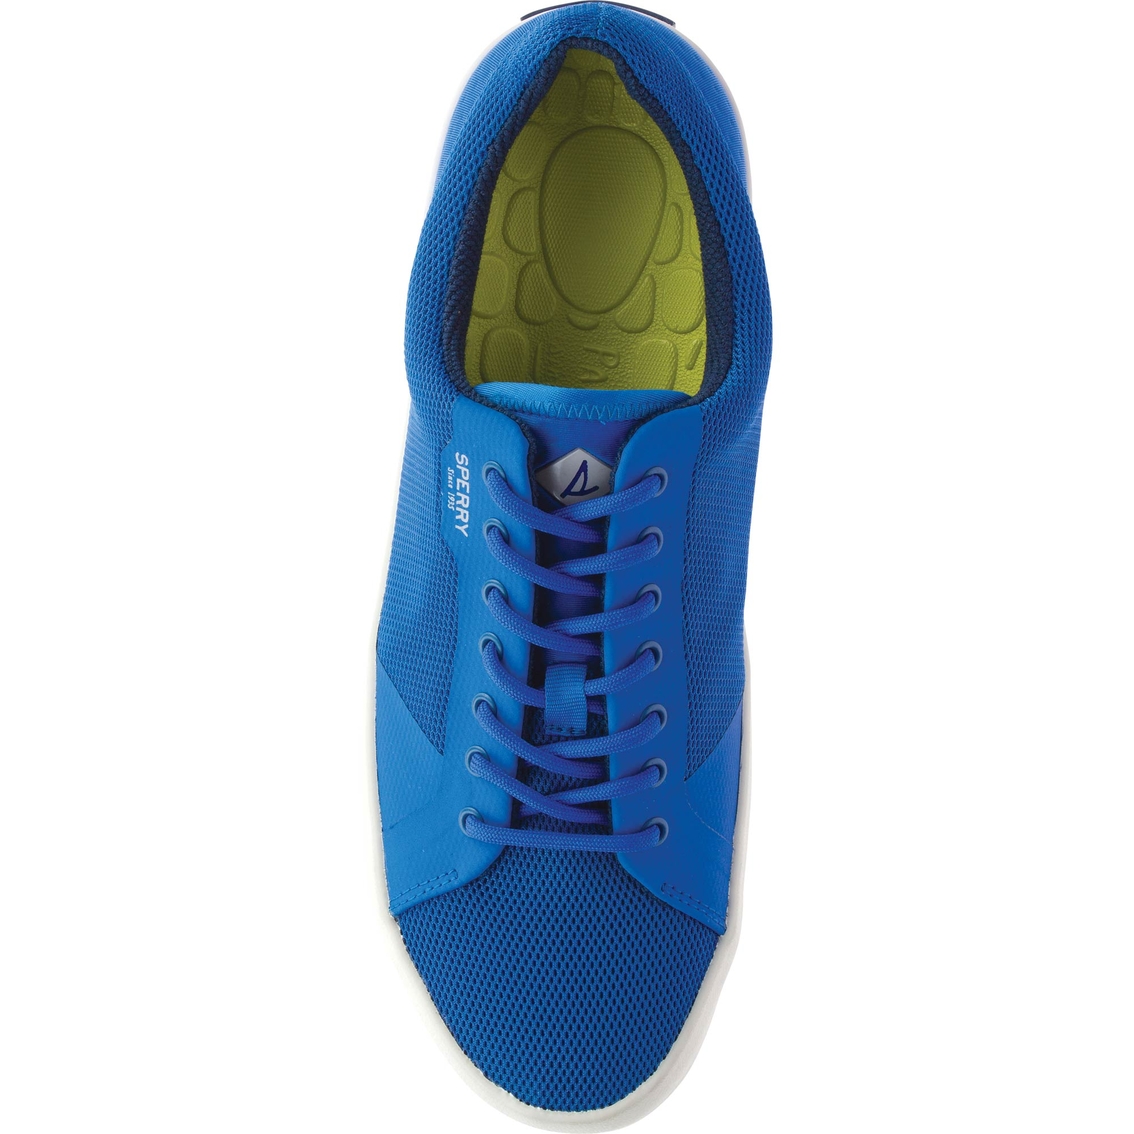 Paul Sperry Men's Flex Deck Ltt Mesh Sneakers | Sneakers | Shoes | Shop ...